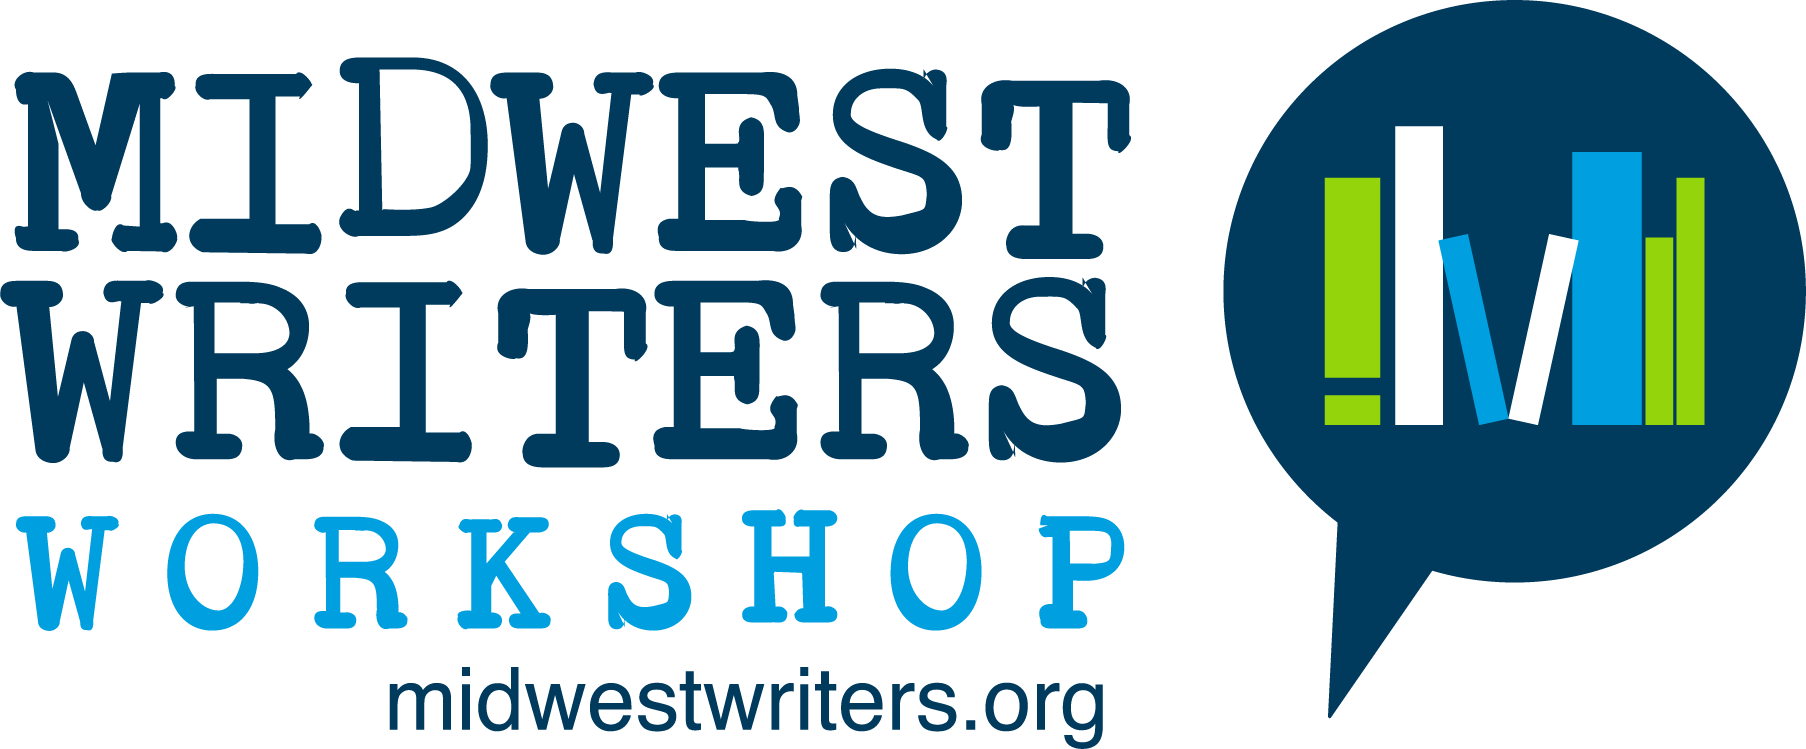 Midwest Writers Workshop, Inc. logo